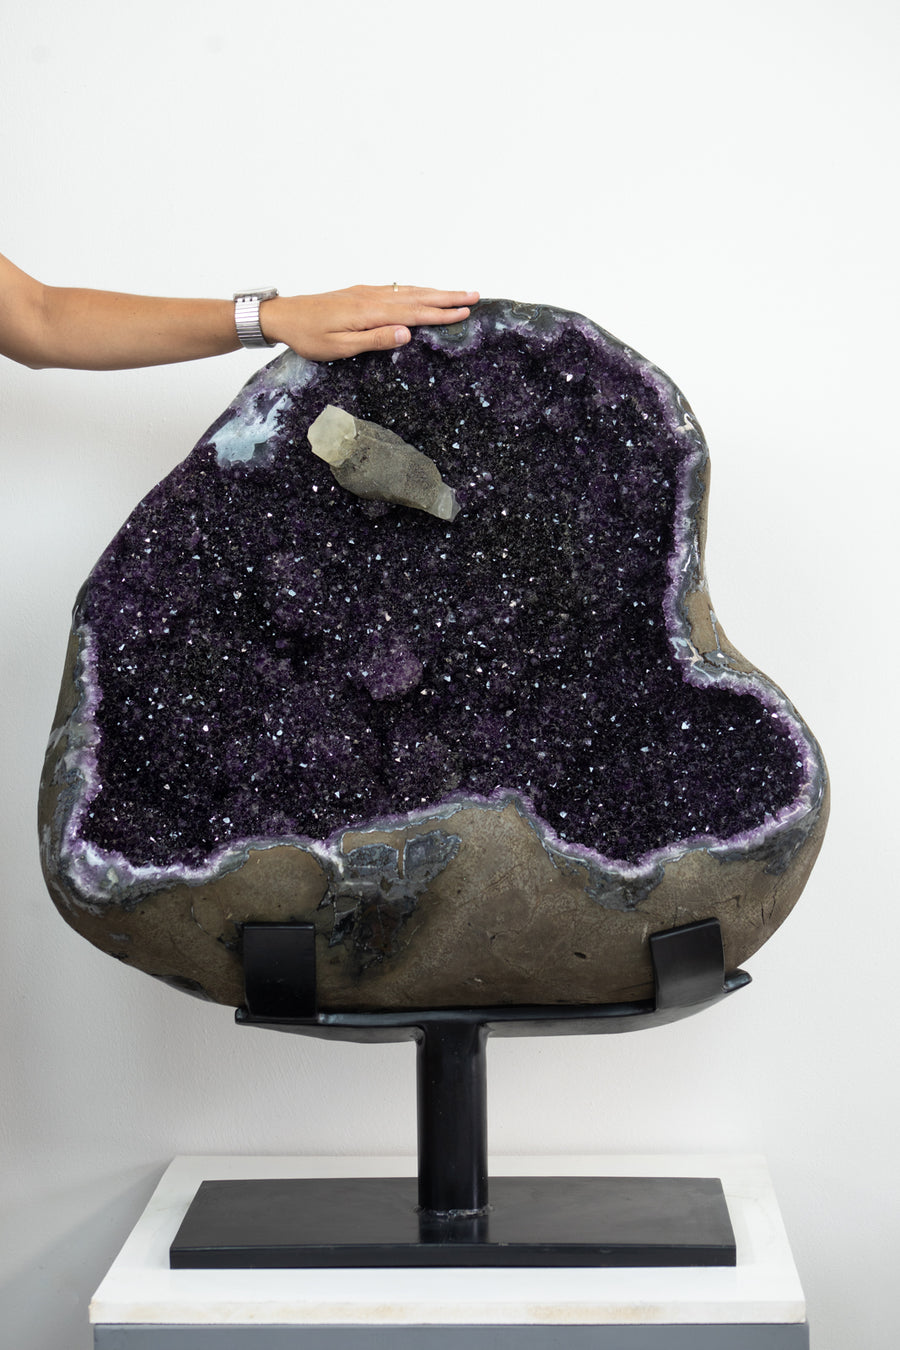 Magnificent Masive Natural Amethyst Geode with Unique Calcite Specimen - AWS1453